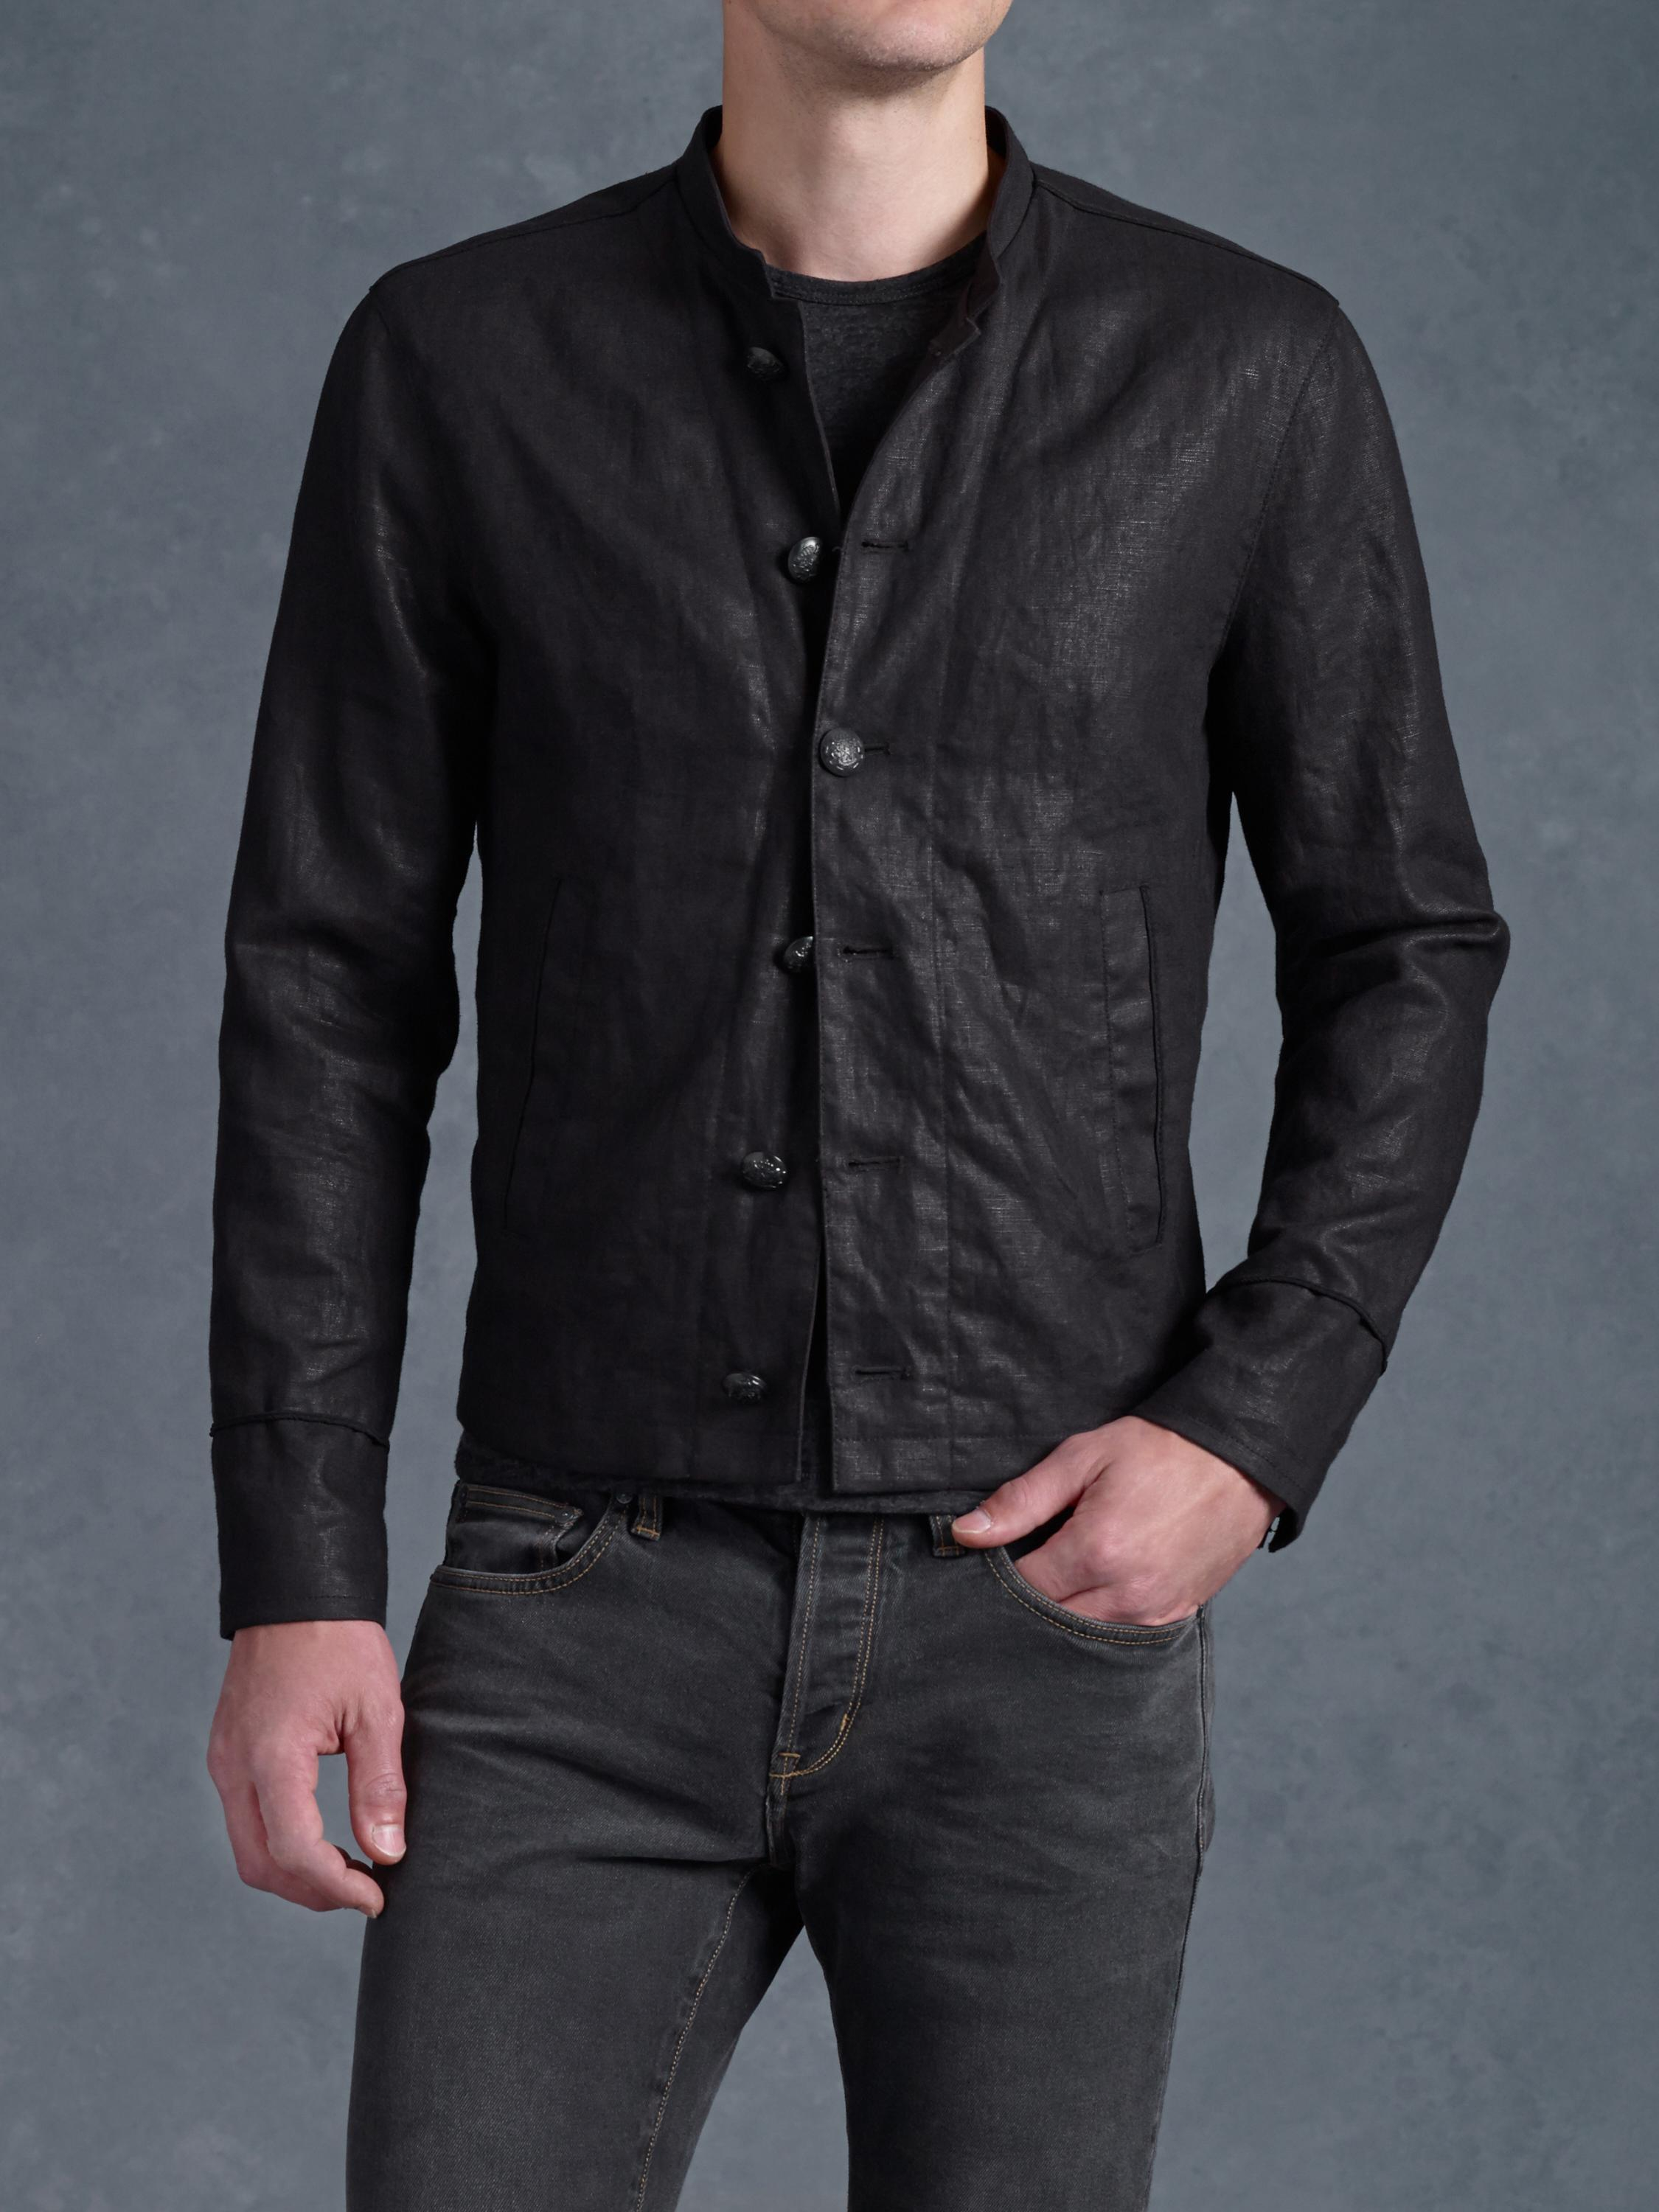 John Varvatos Linen Officer Jacket in Black for Men - Lyst